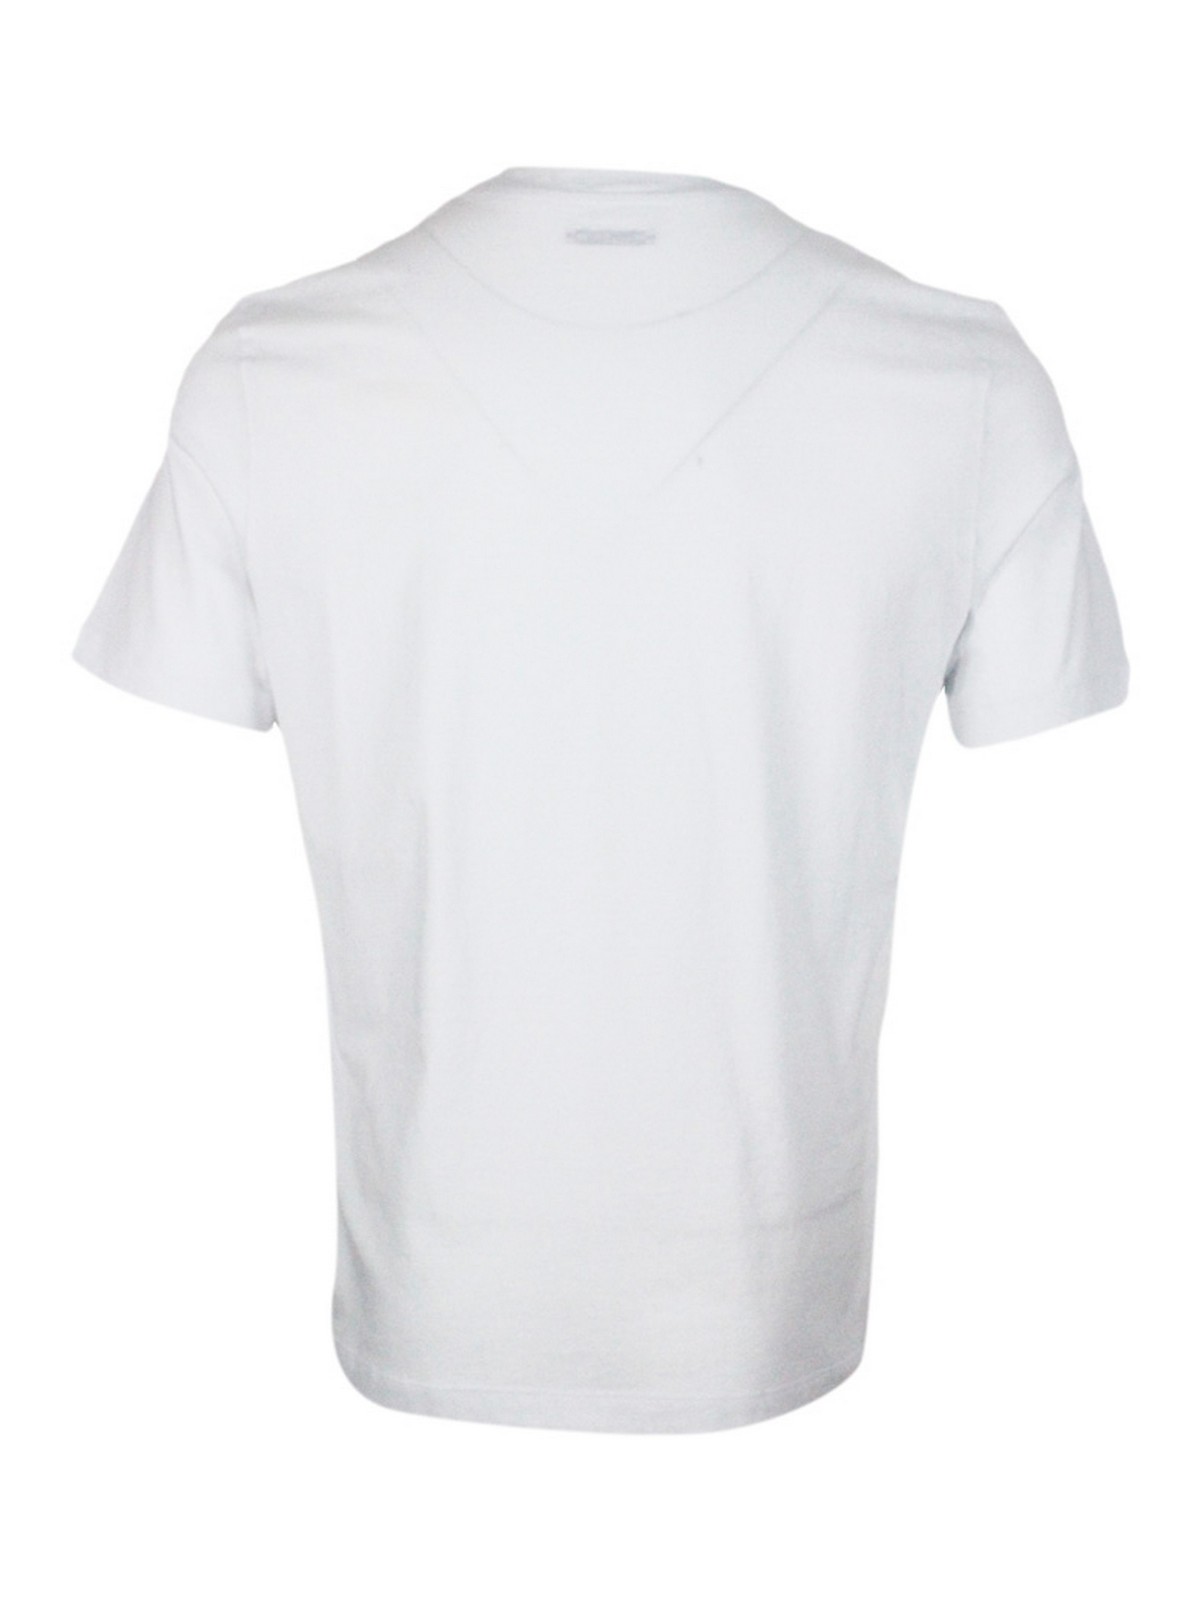 Shop Jacob Cohen T-shirts And Polos White